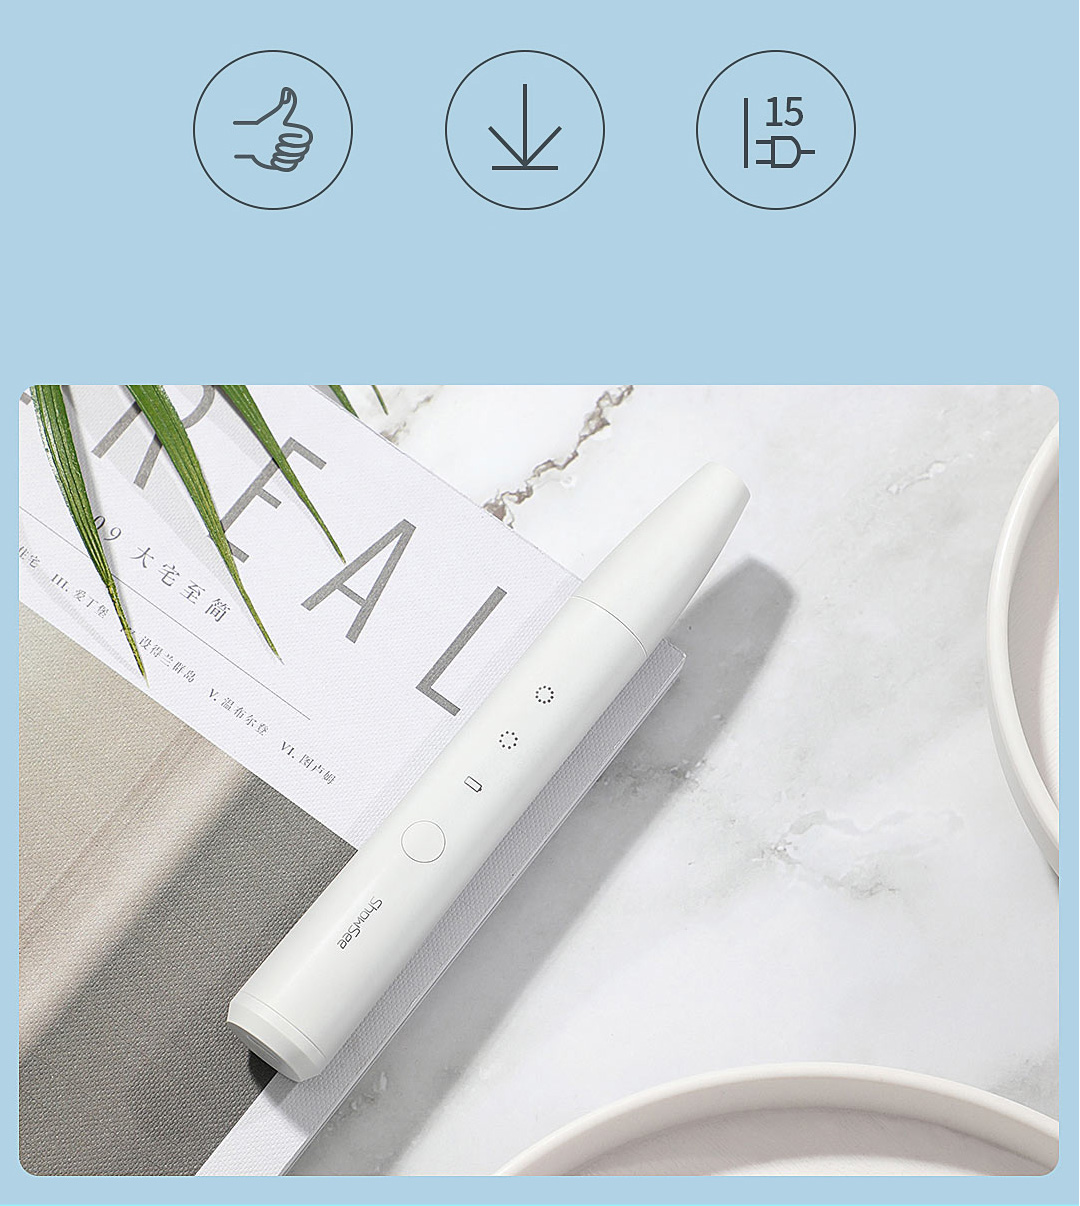 Xiaomi ShowSee Electric Nail Buffer